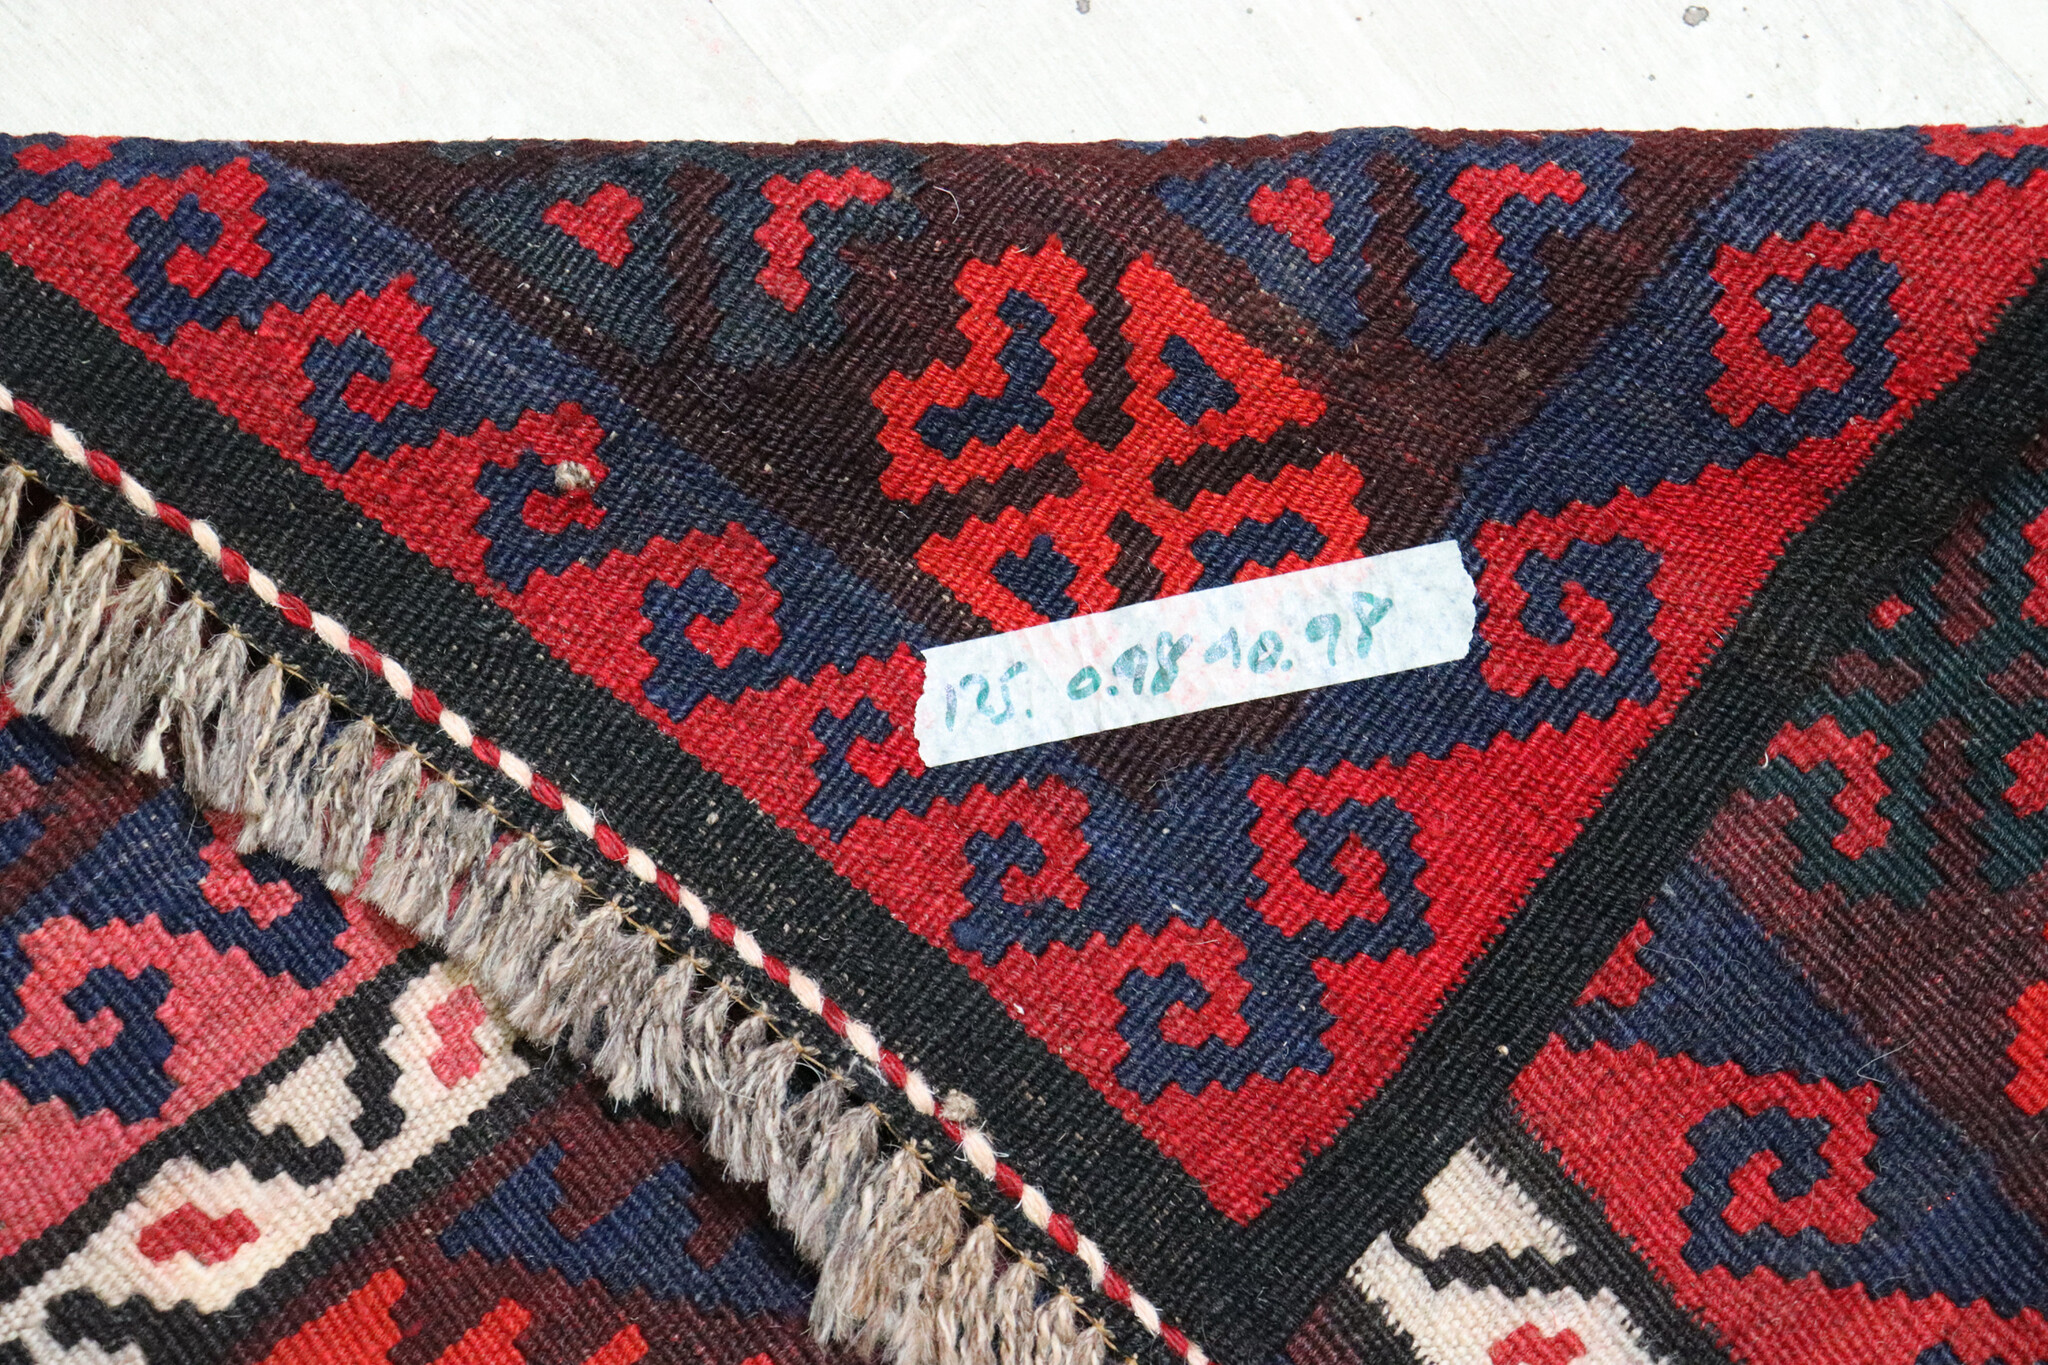 98x98 cm Afghan   nomadic Kilim rug  No:125